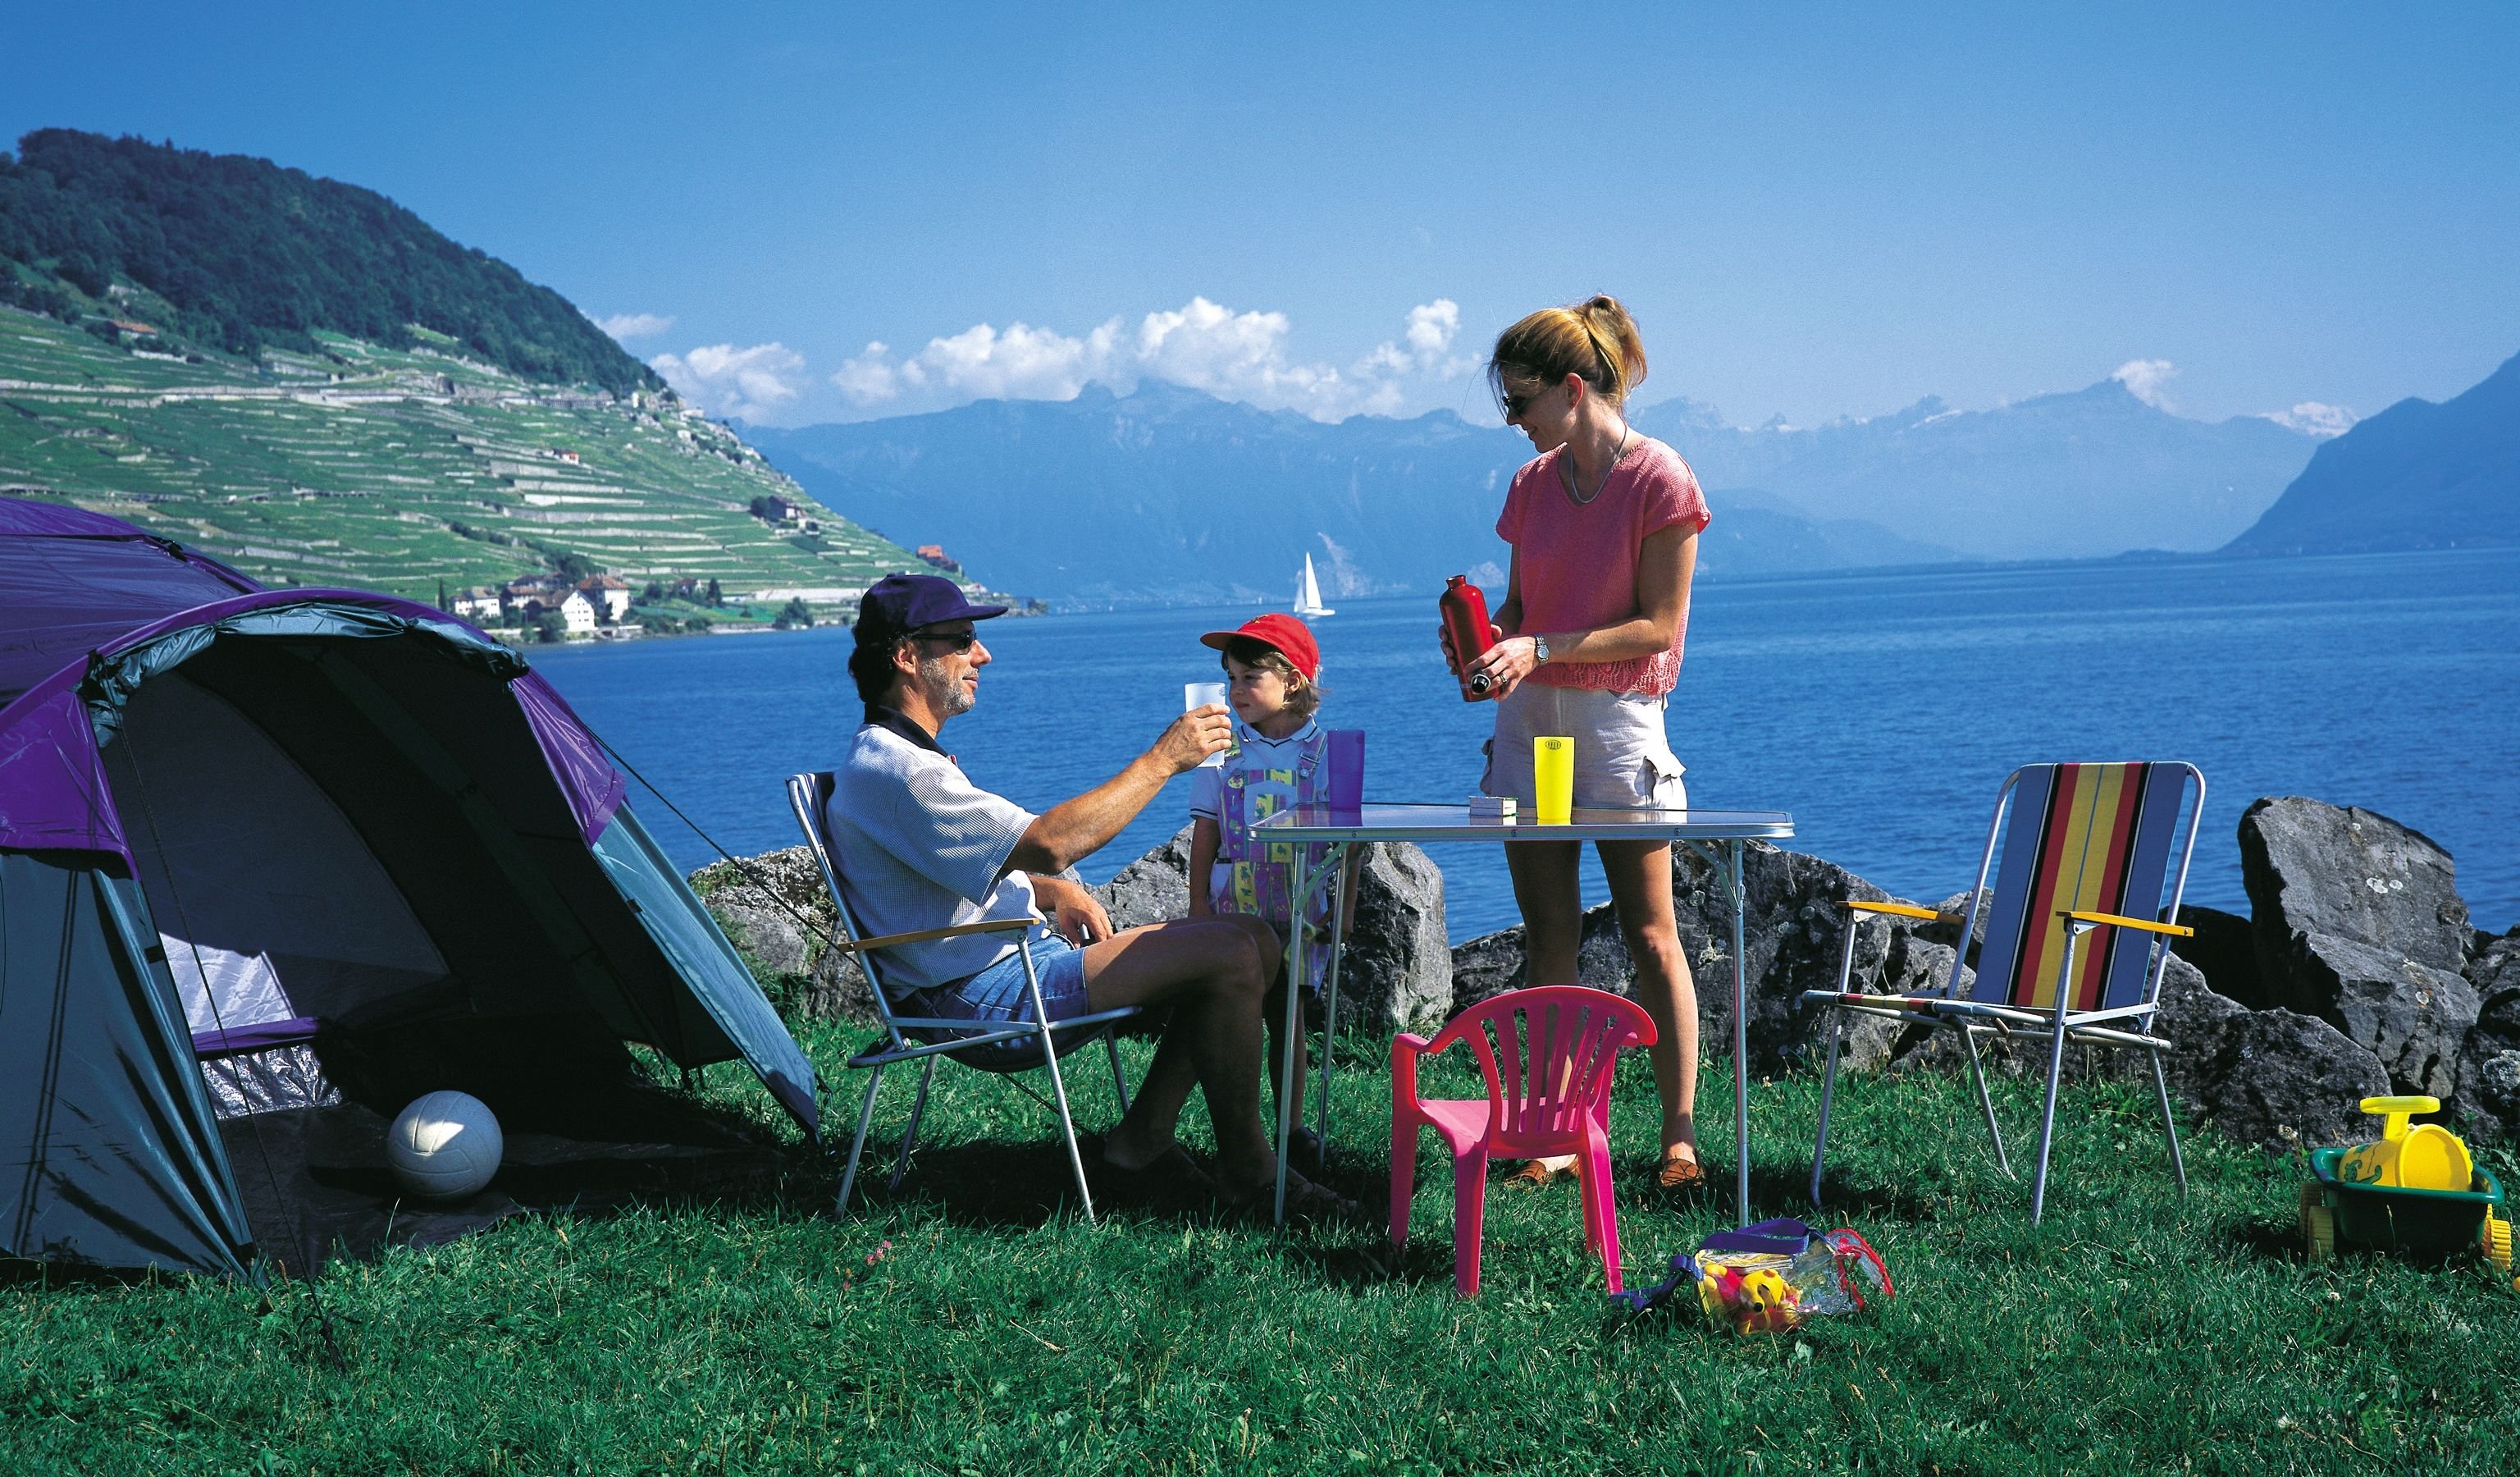 Tourist camping. Кемпинг в Швейцарии. Швейцария туризм. Туристы в Швейцарии. Познавательный туризм в Швейцарии.